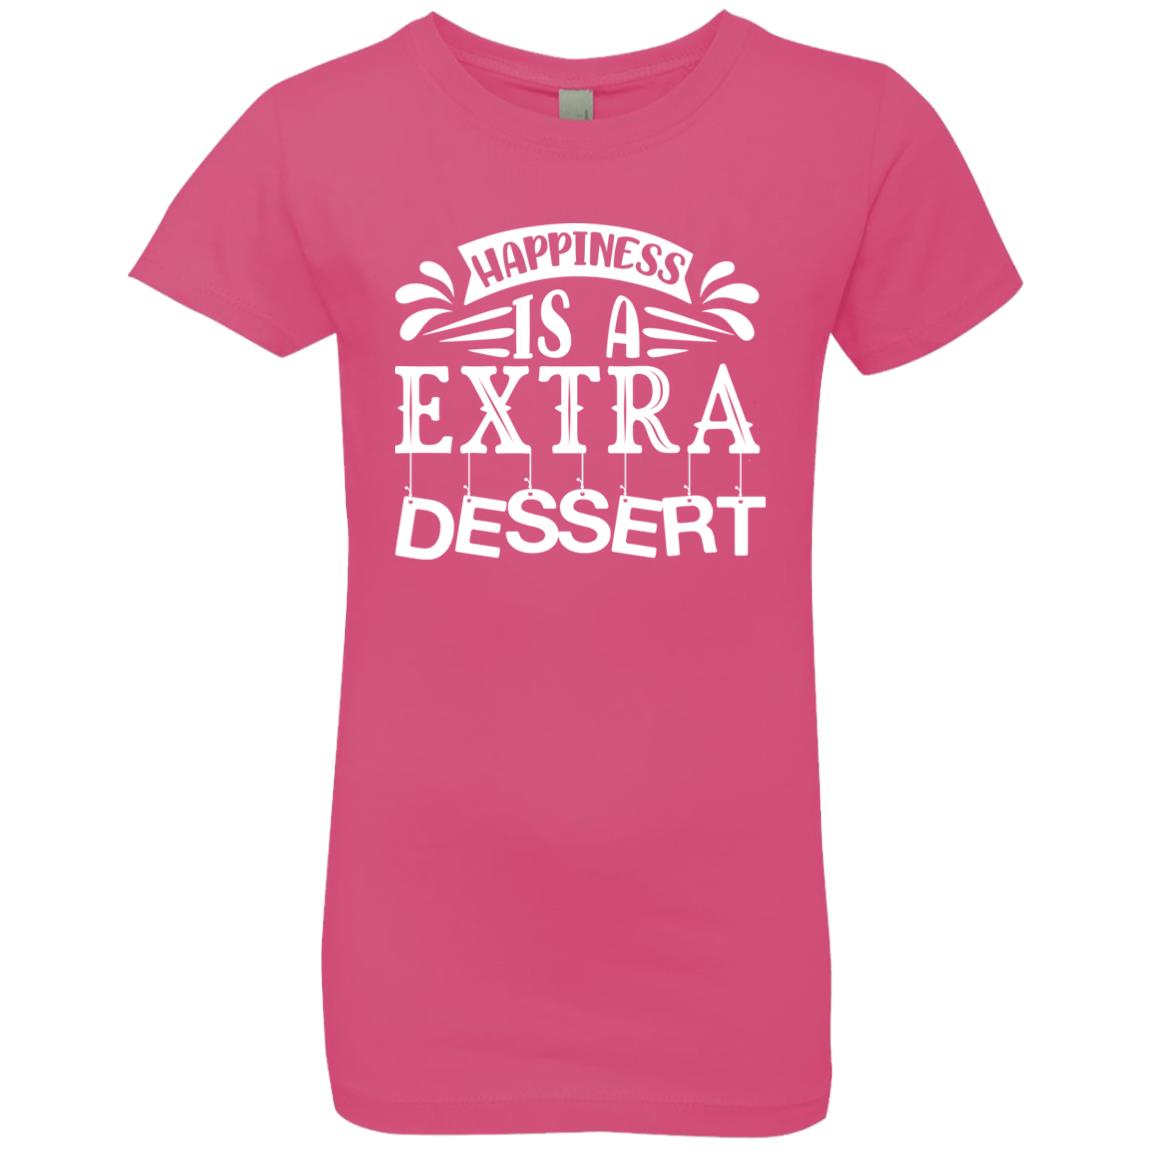 Happiness Is an Extra Dessert | Short Sleeve Kids T-shrit | 100% Cotton